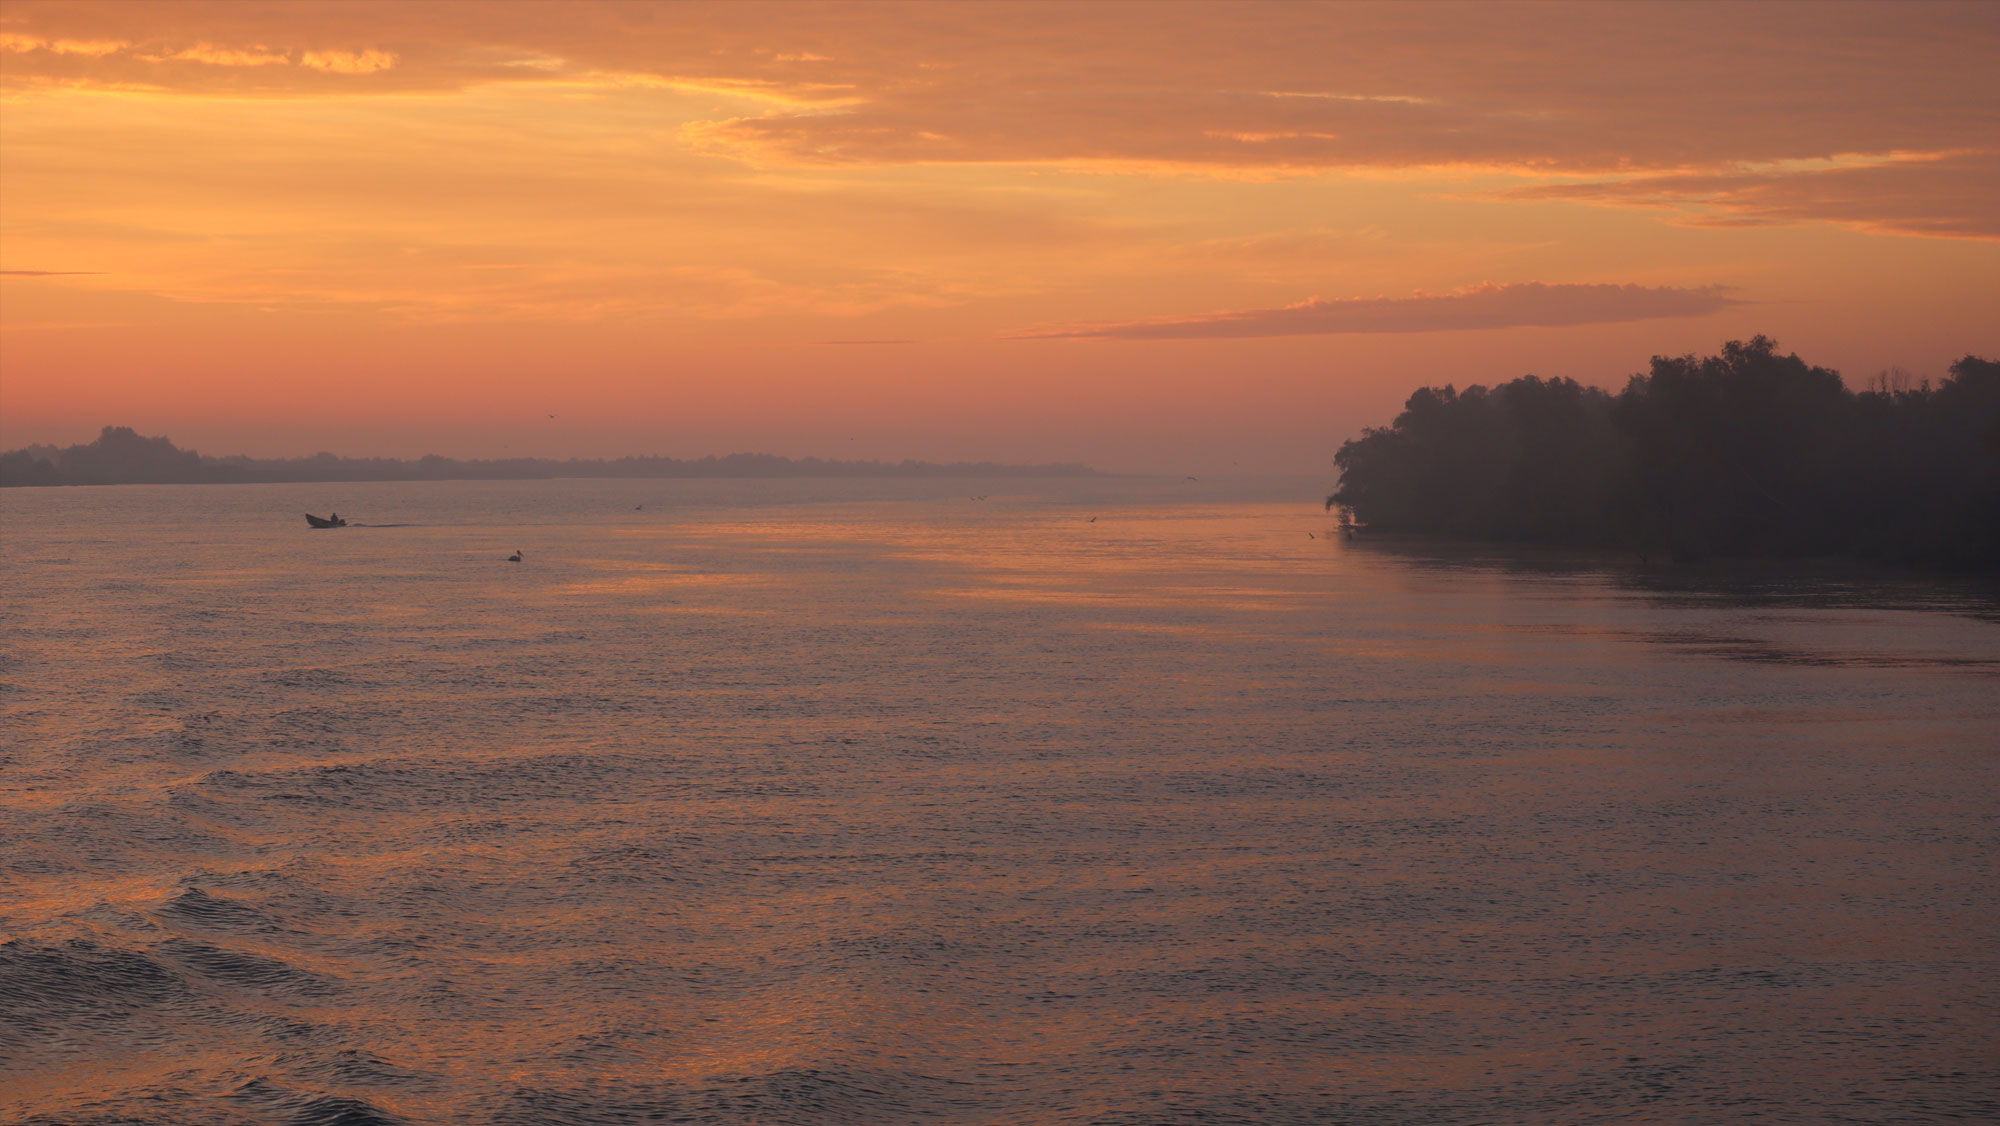 Fantastic sunset in The Danube Delta